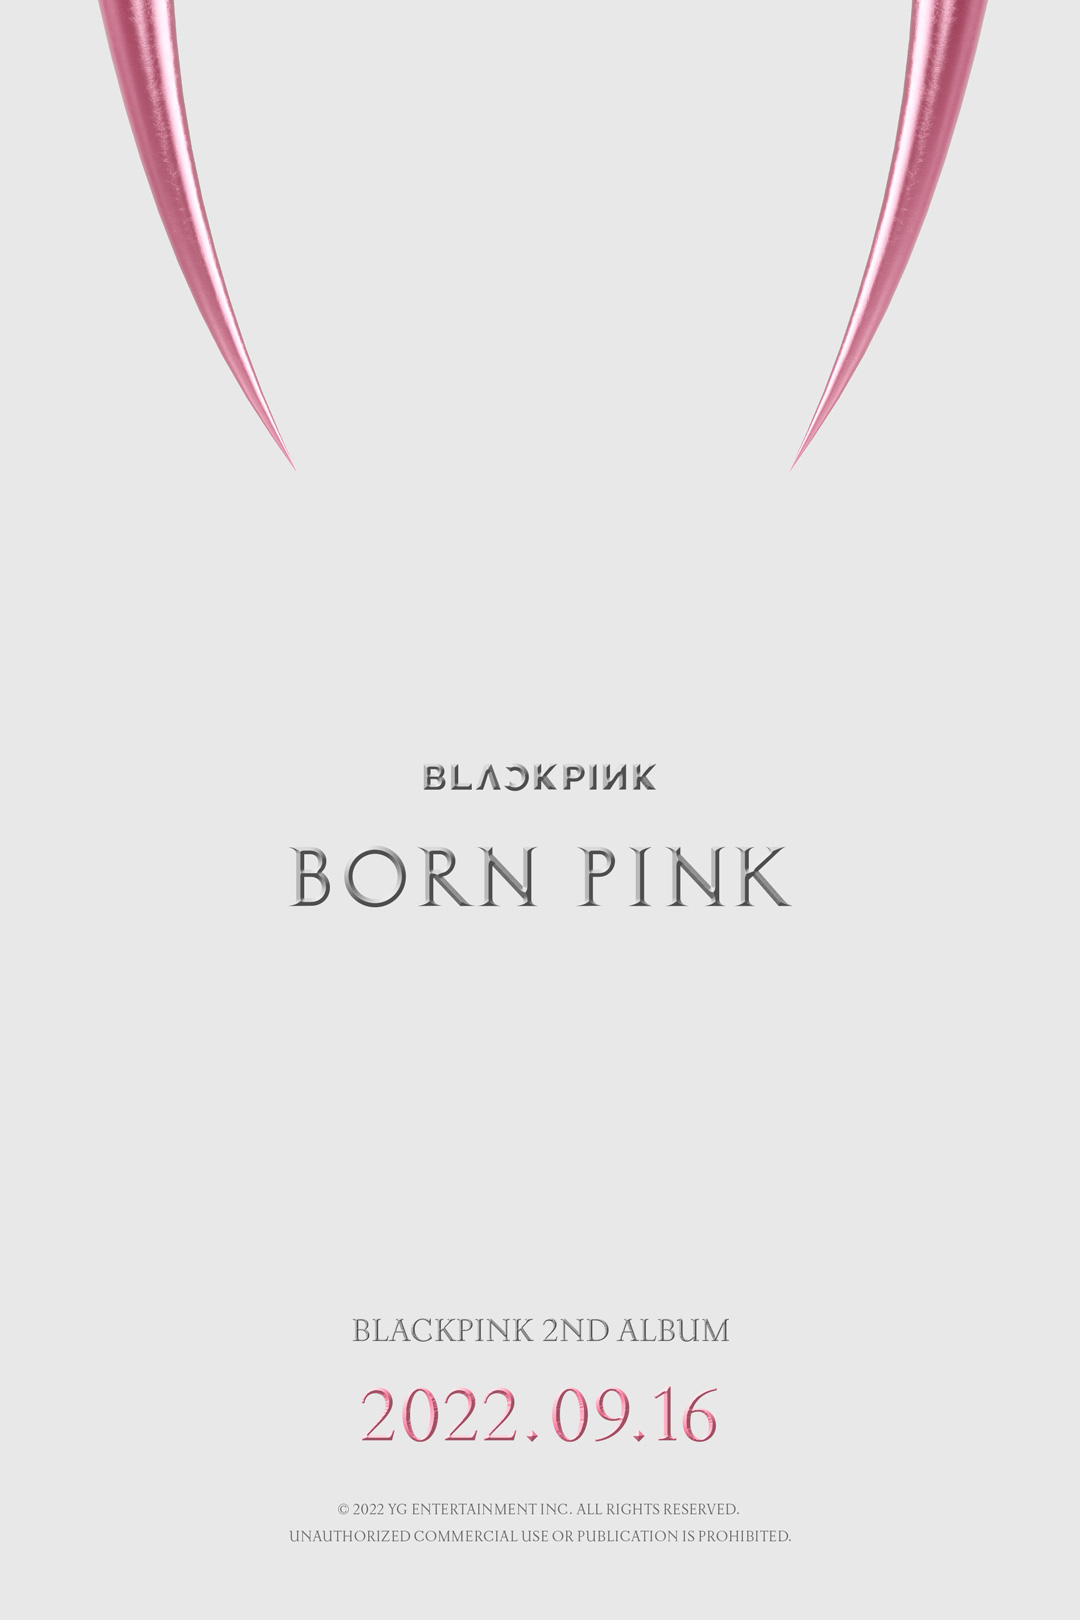 Blackpink's new full album 'Born Pink'